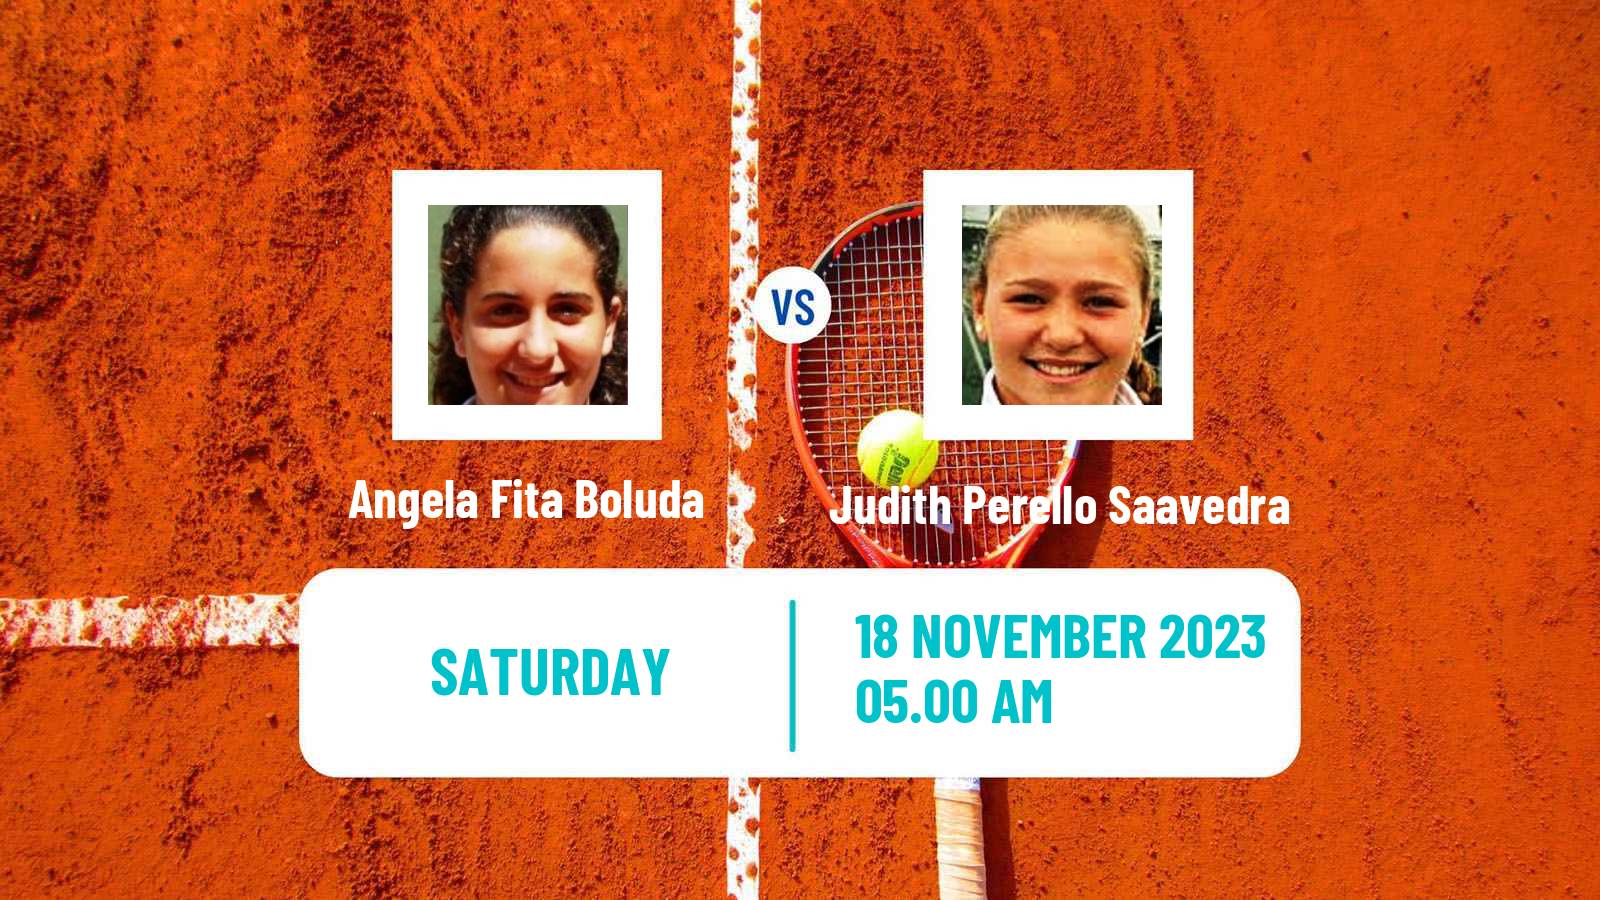 Tennis ITF W15 Nules Women Angela Fita Boluda - Judith Perello Saavedra